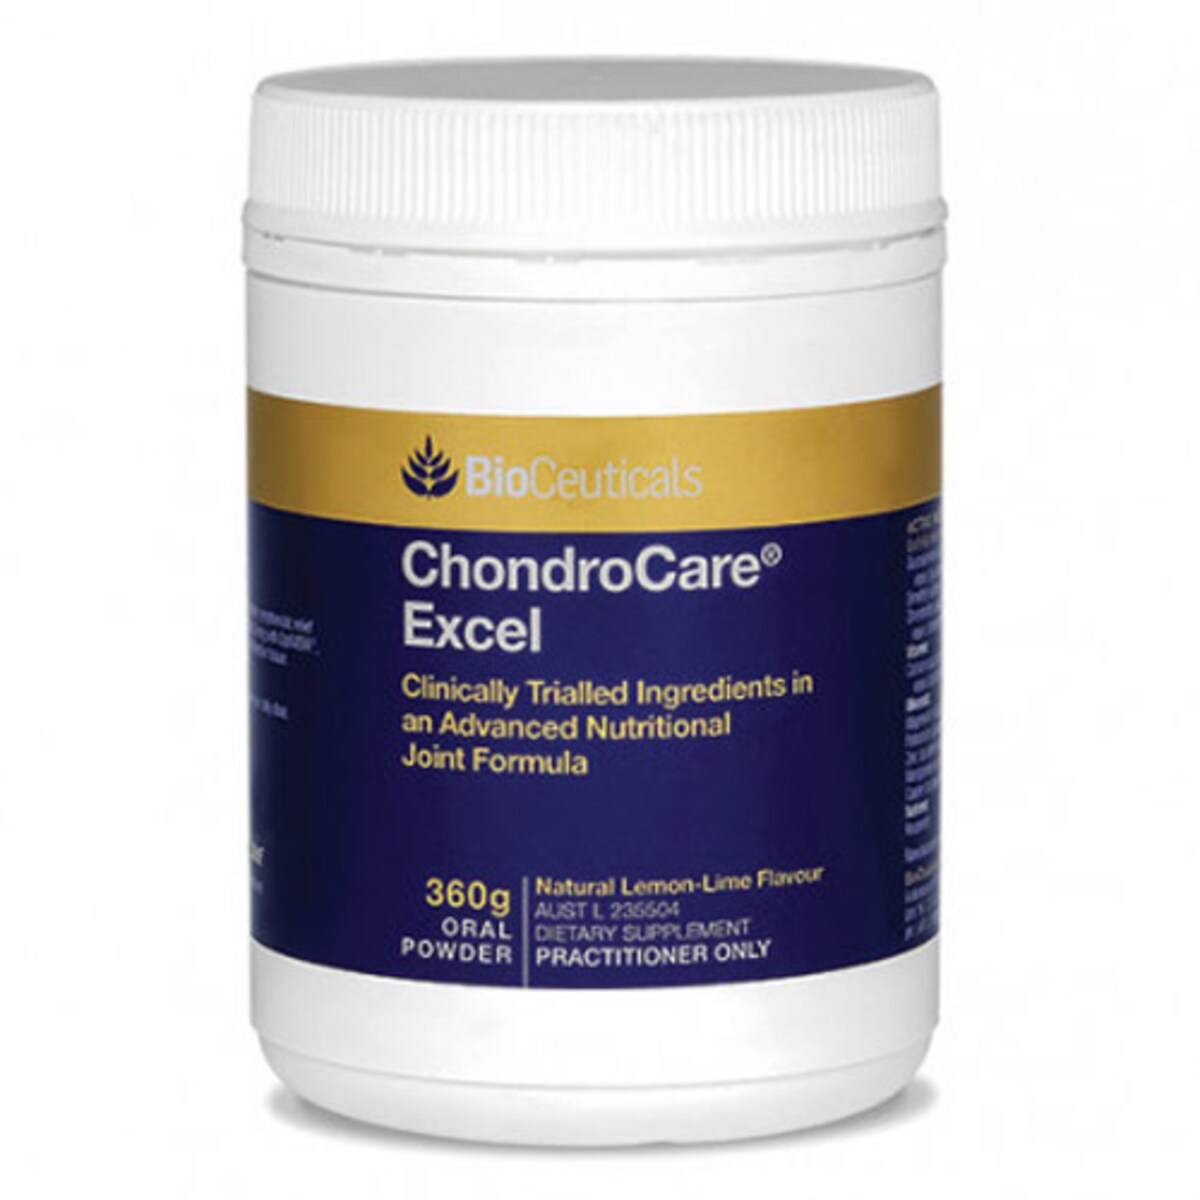 BioCeuticals ChondroCare Excel Powder 360g